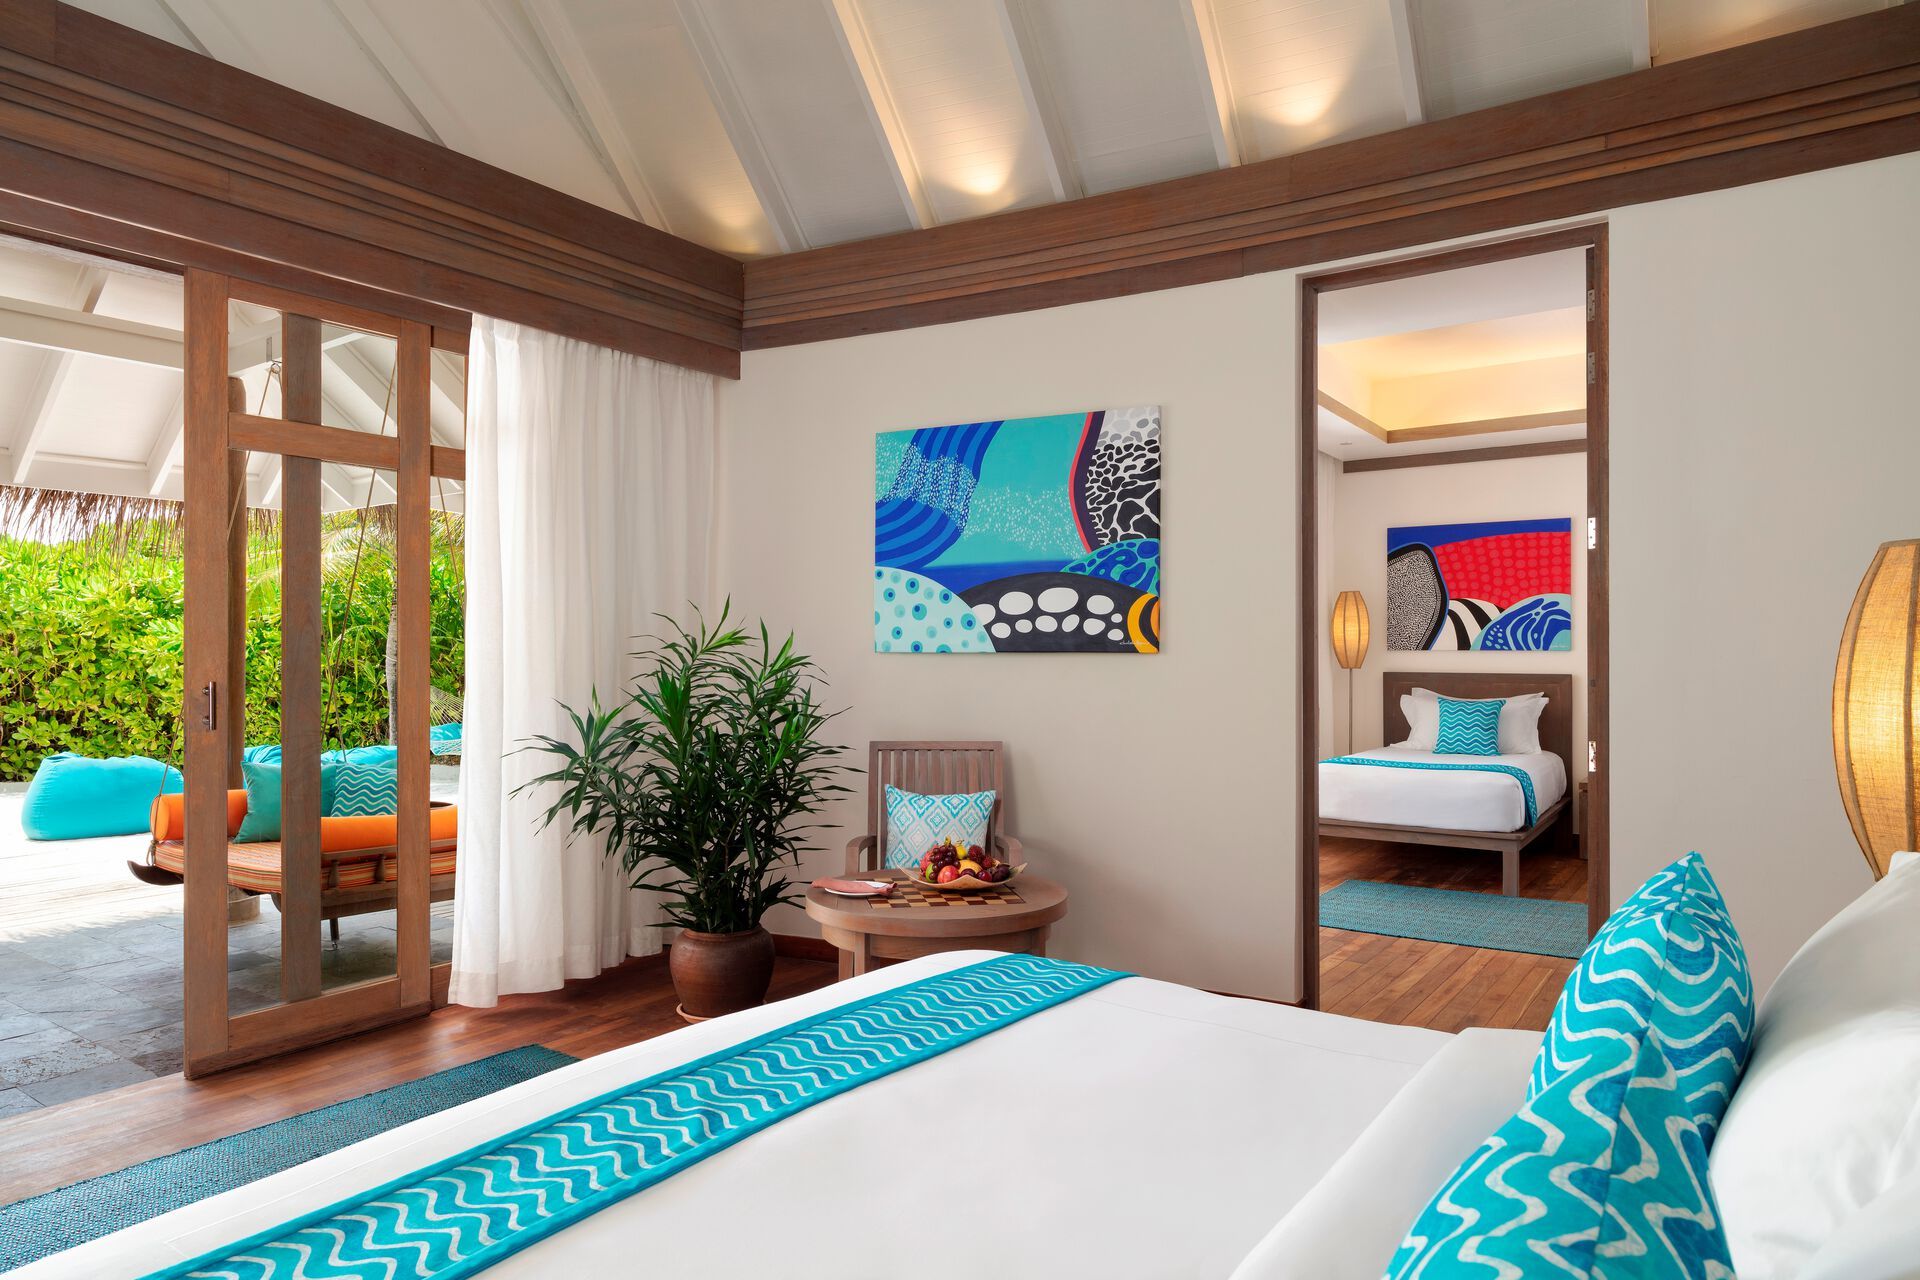 Maldives - Hotel Anantara Dhigu Maldives Resort 5* - transfert inclus